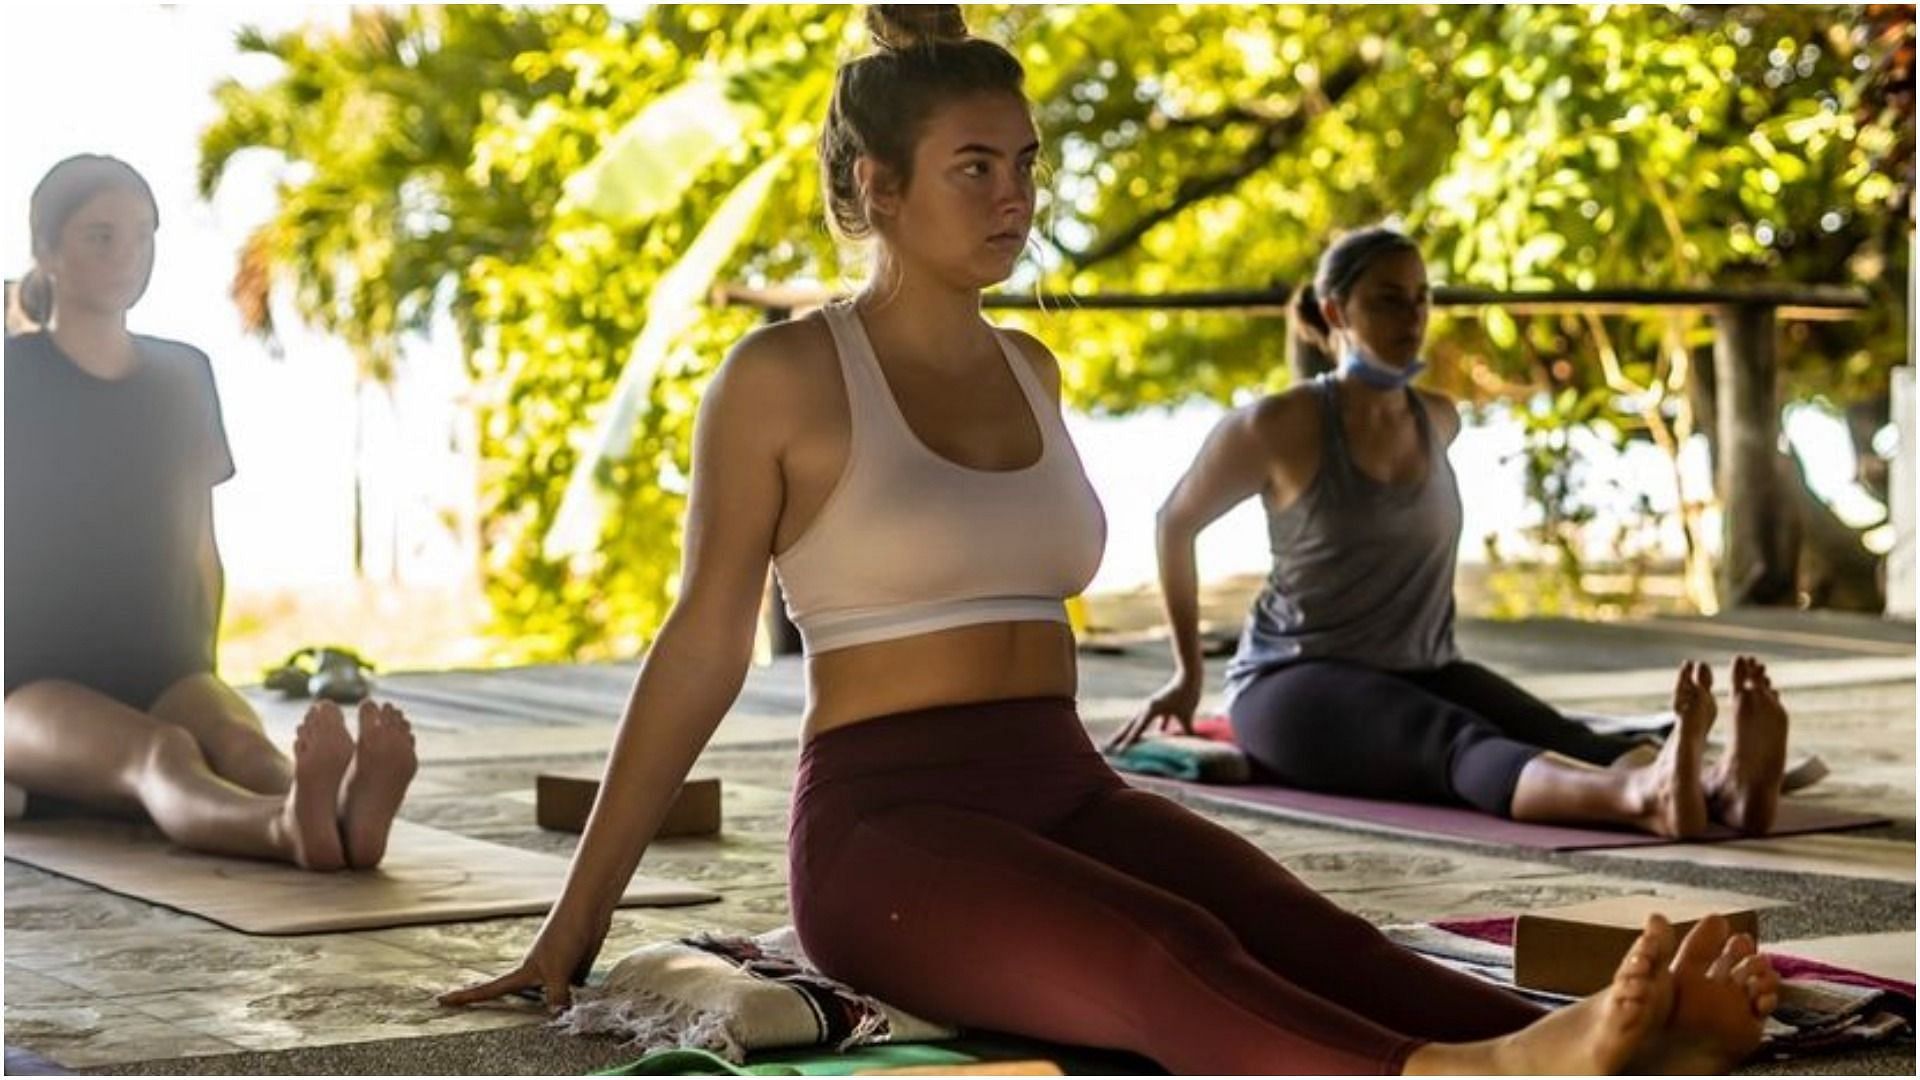 Balancing Yoga Poses For Beginners - 7pranayama.com